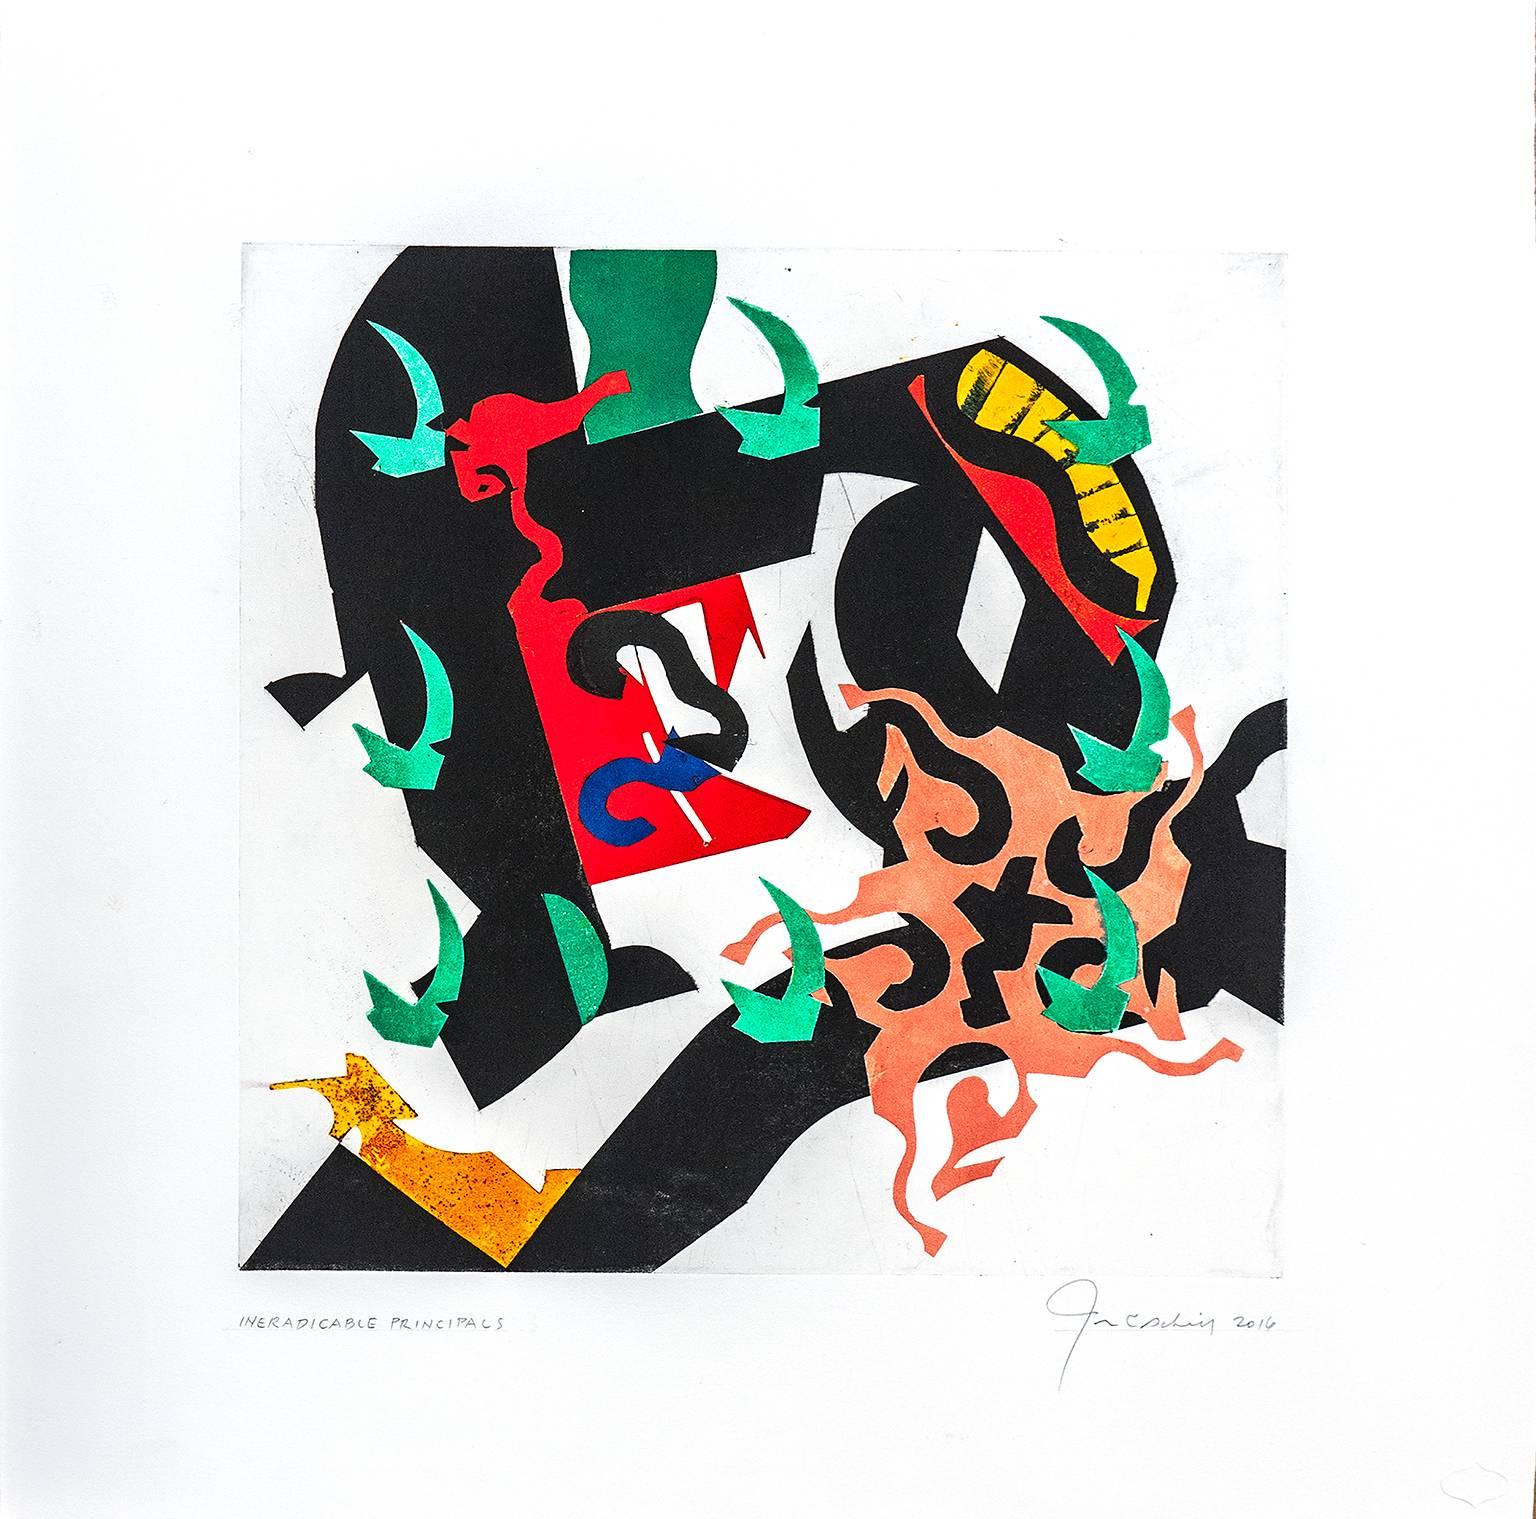 John Schiff Abstract Print - "Ineradicable Principals", abstract modernist monoprint, black, green, yellow.